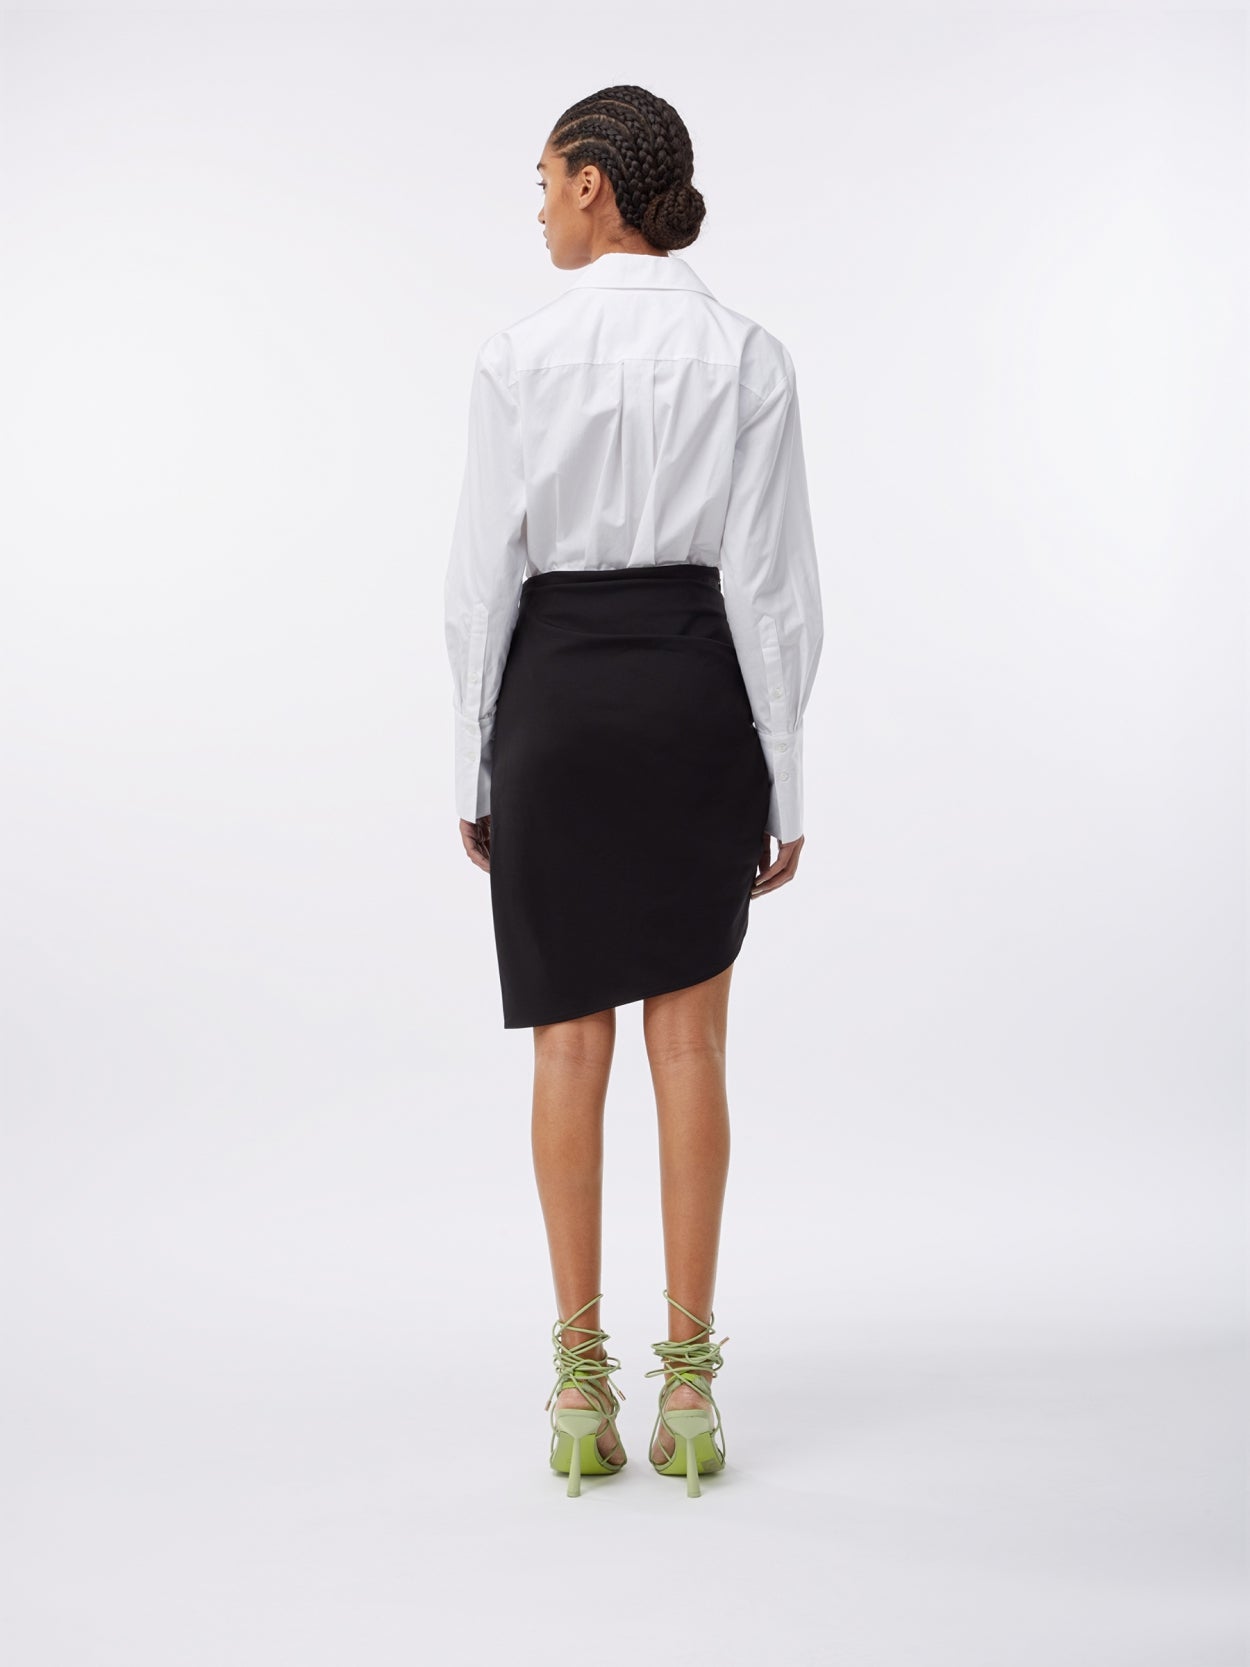 model wearing a white shirt bodysuit and a black asymmetric jersey draped skirt